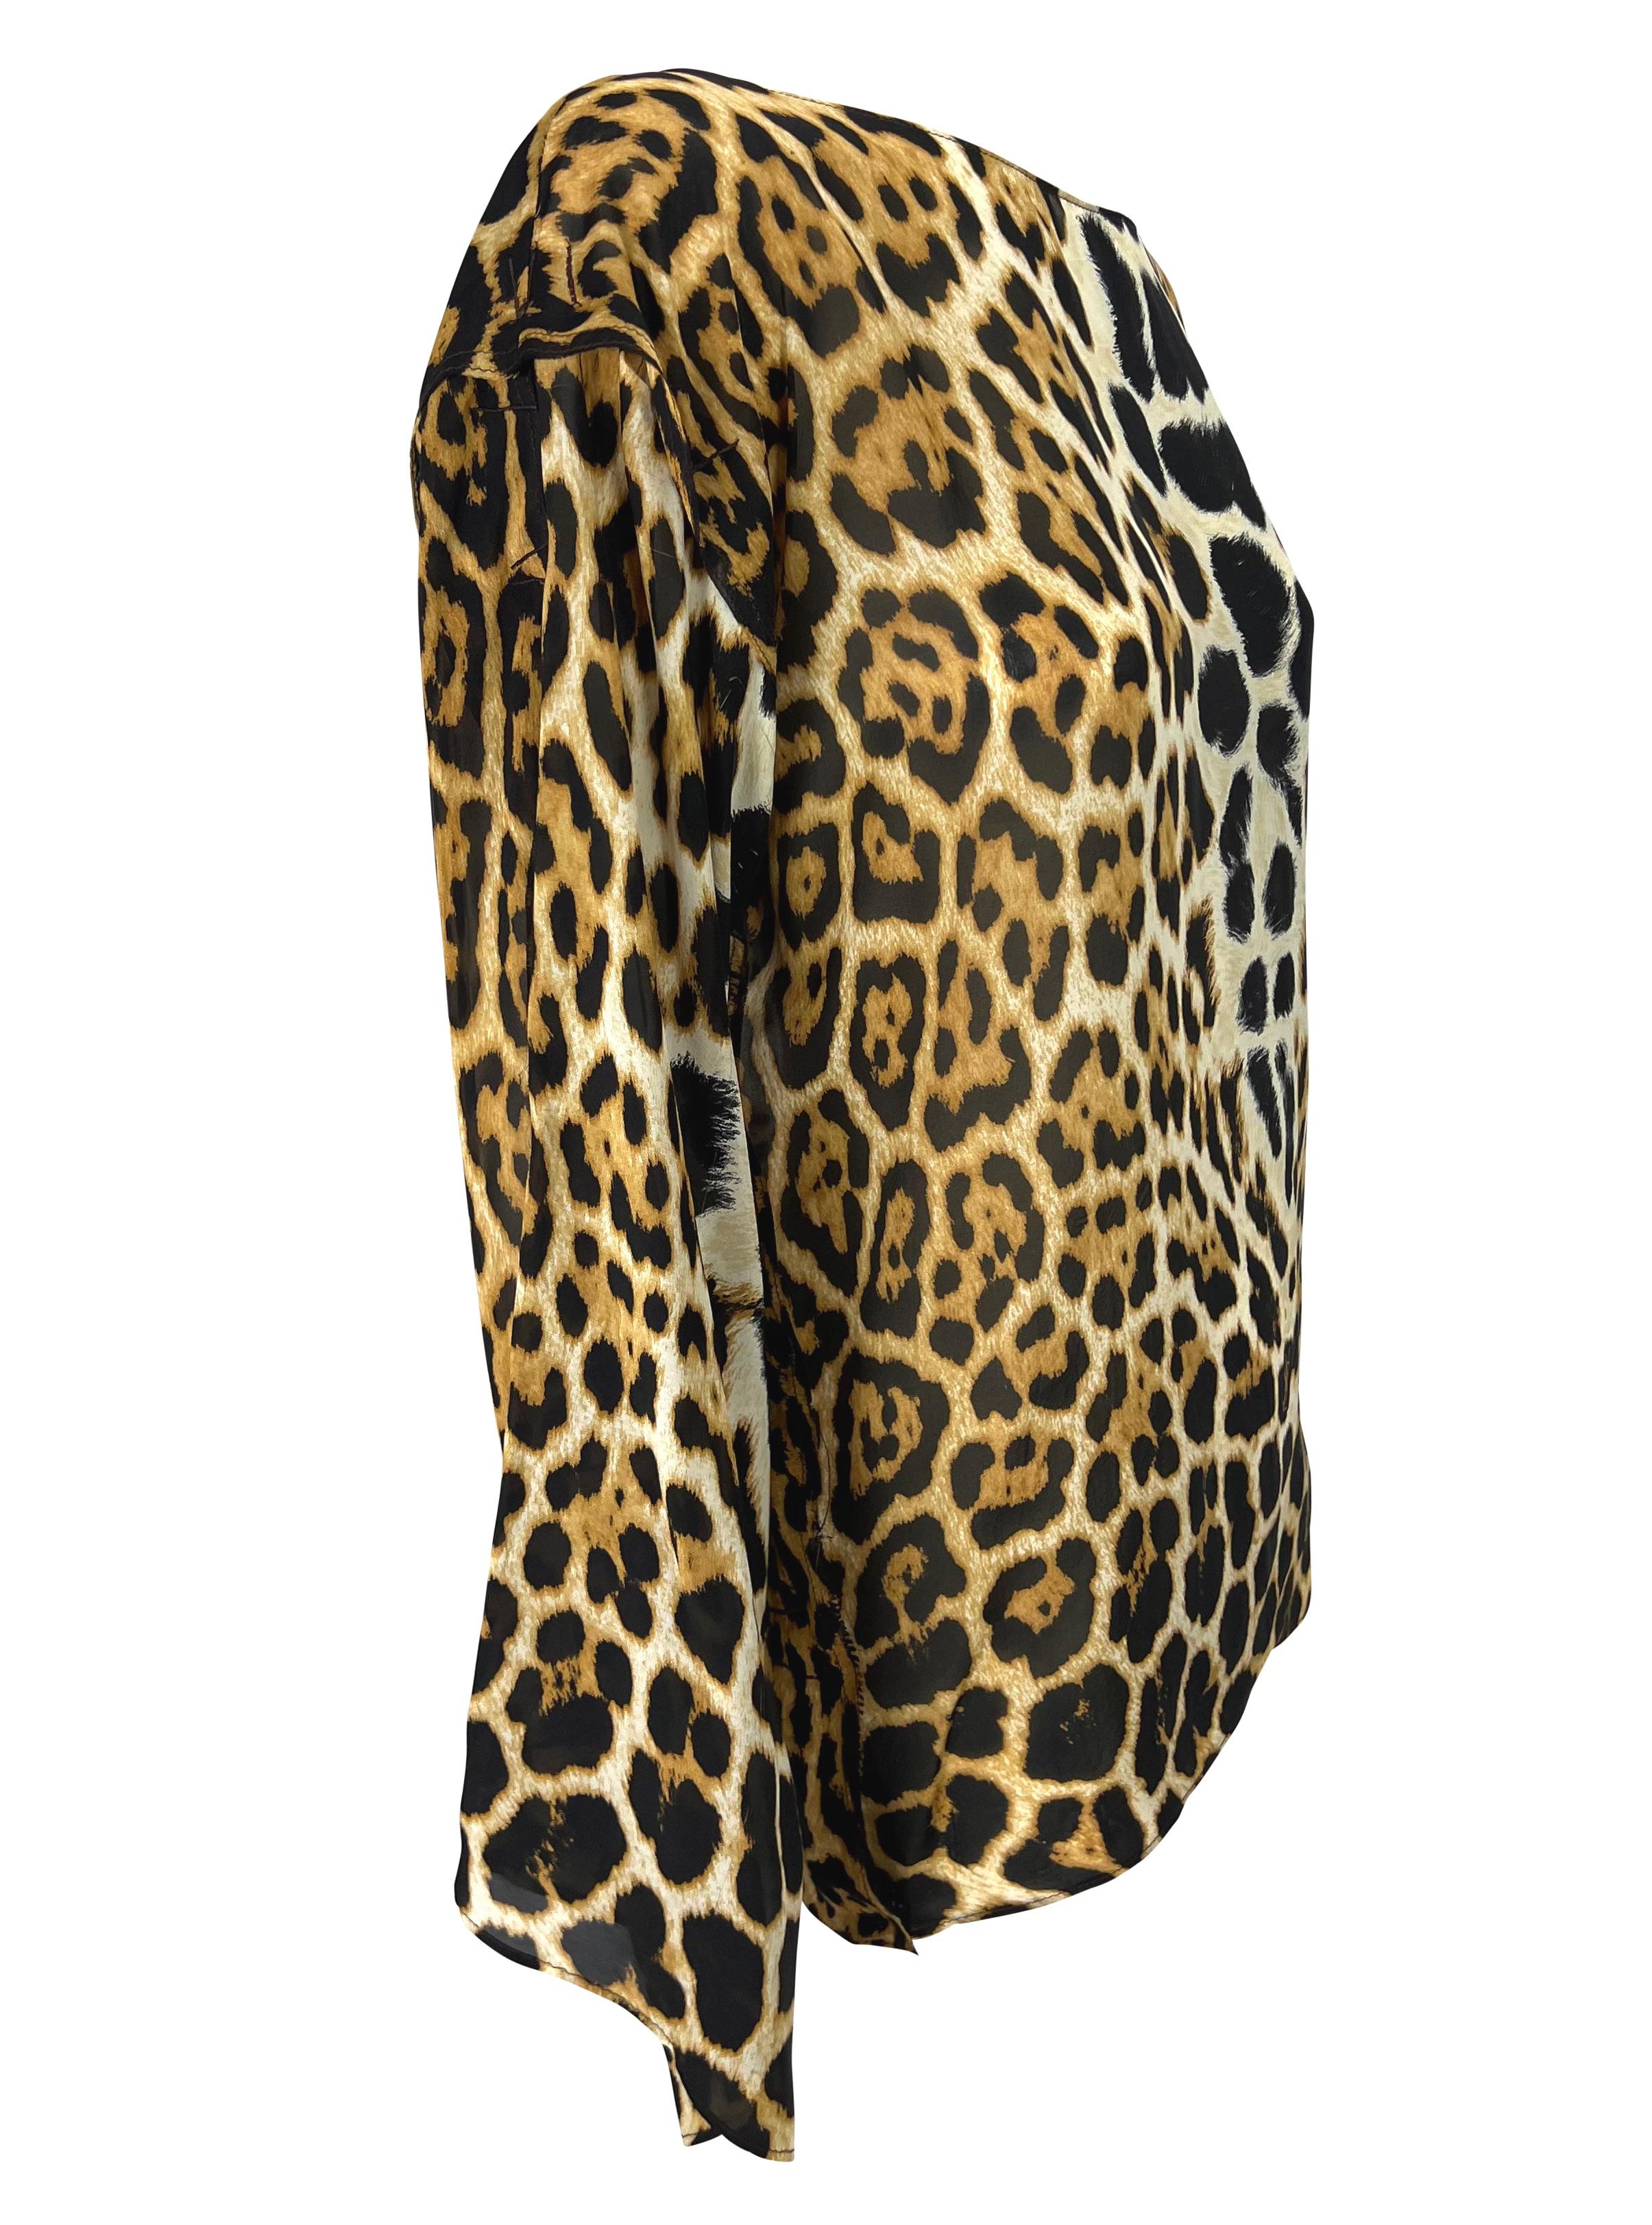 Black S/S 2002 Yves Saint Laurent by Tom Ford Safari Cheetah Print Sheer Silk Top For Sale